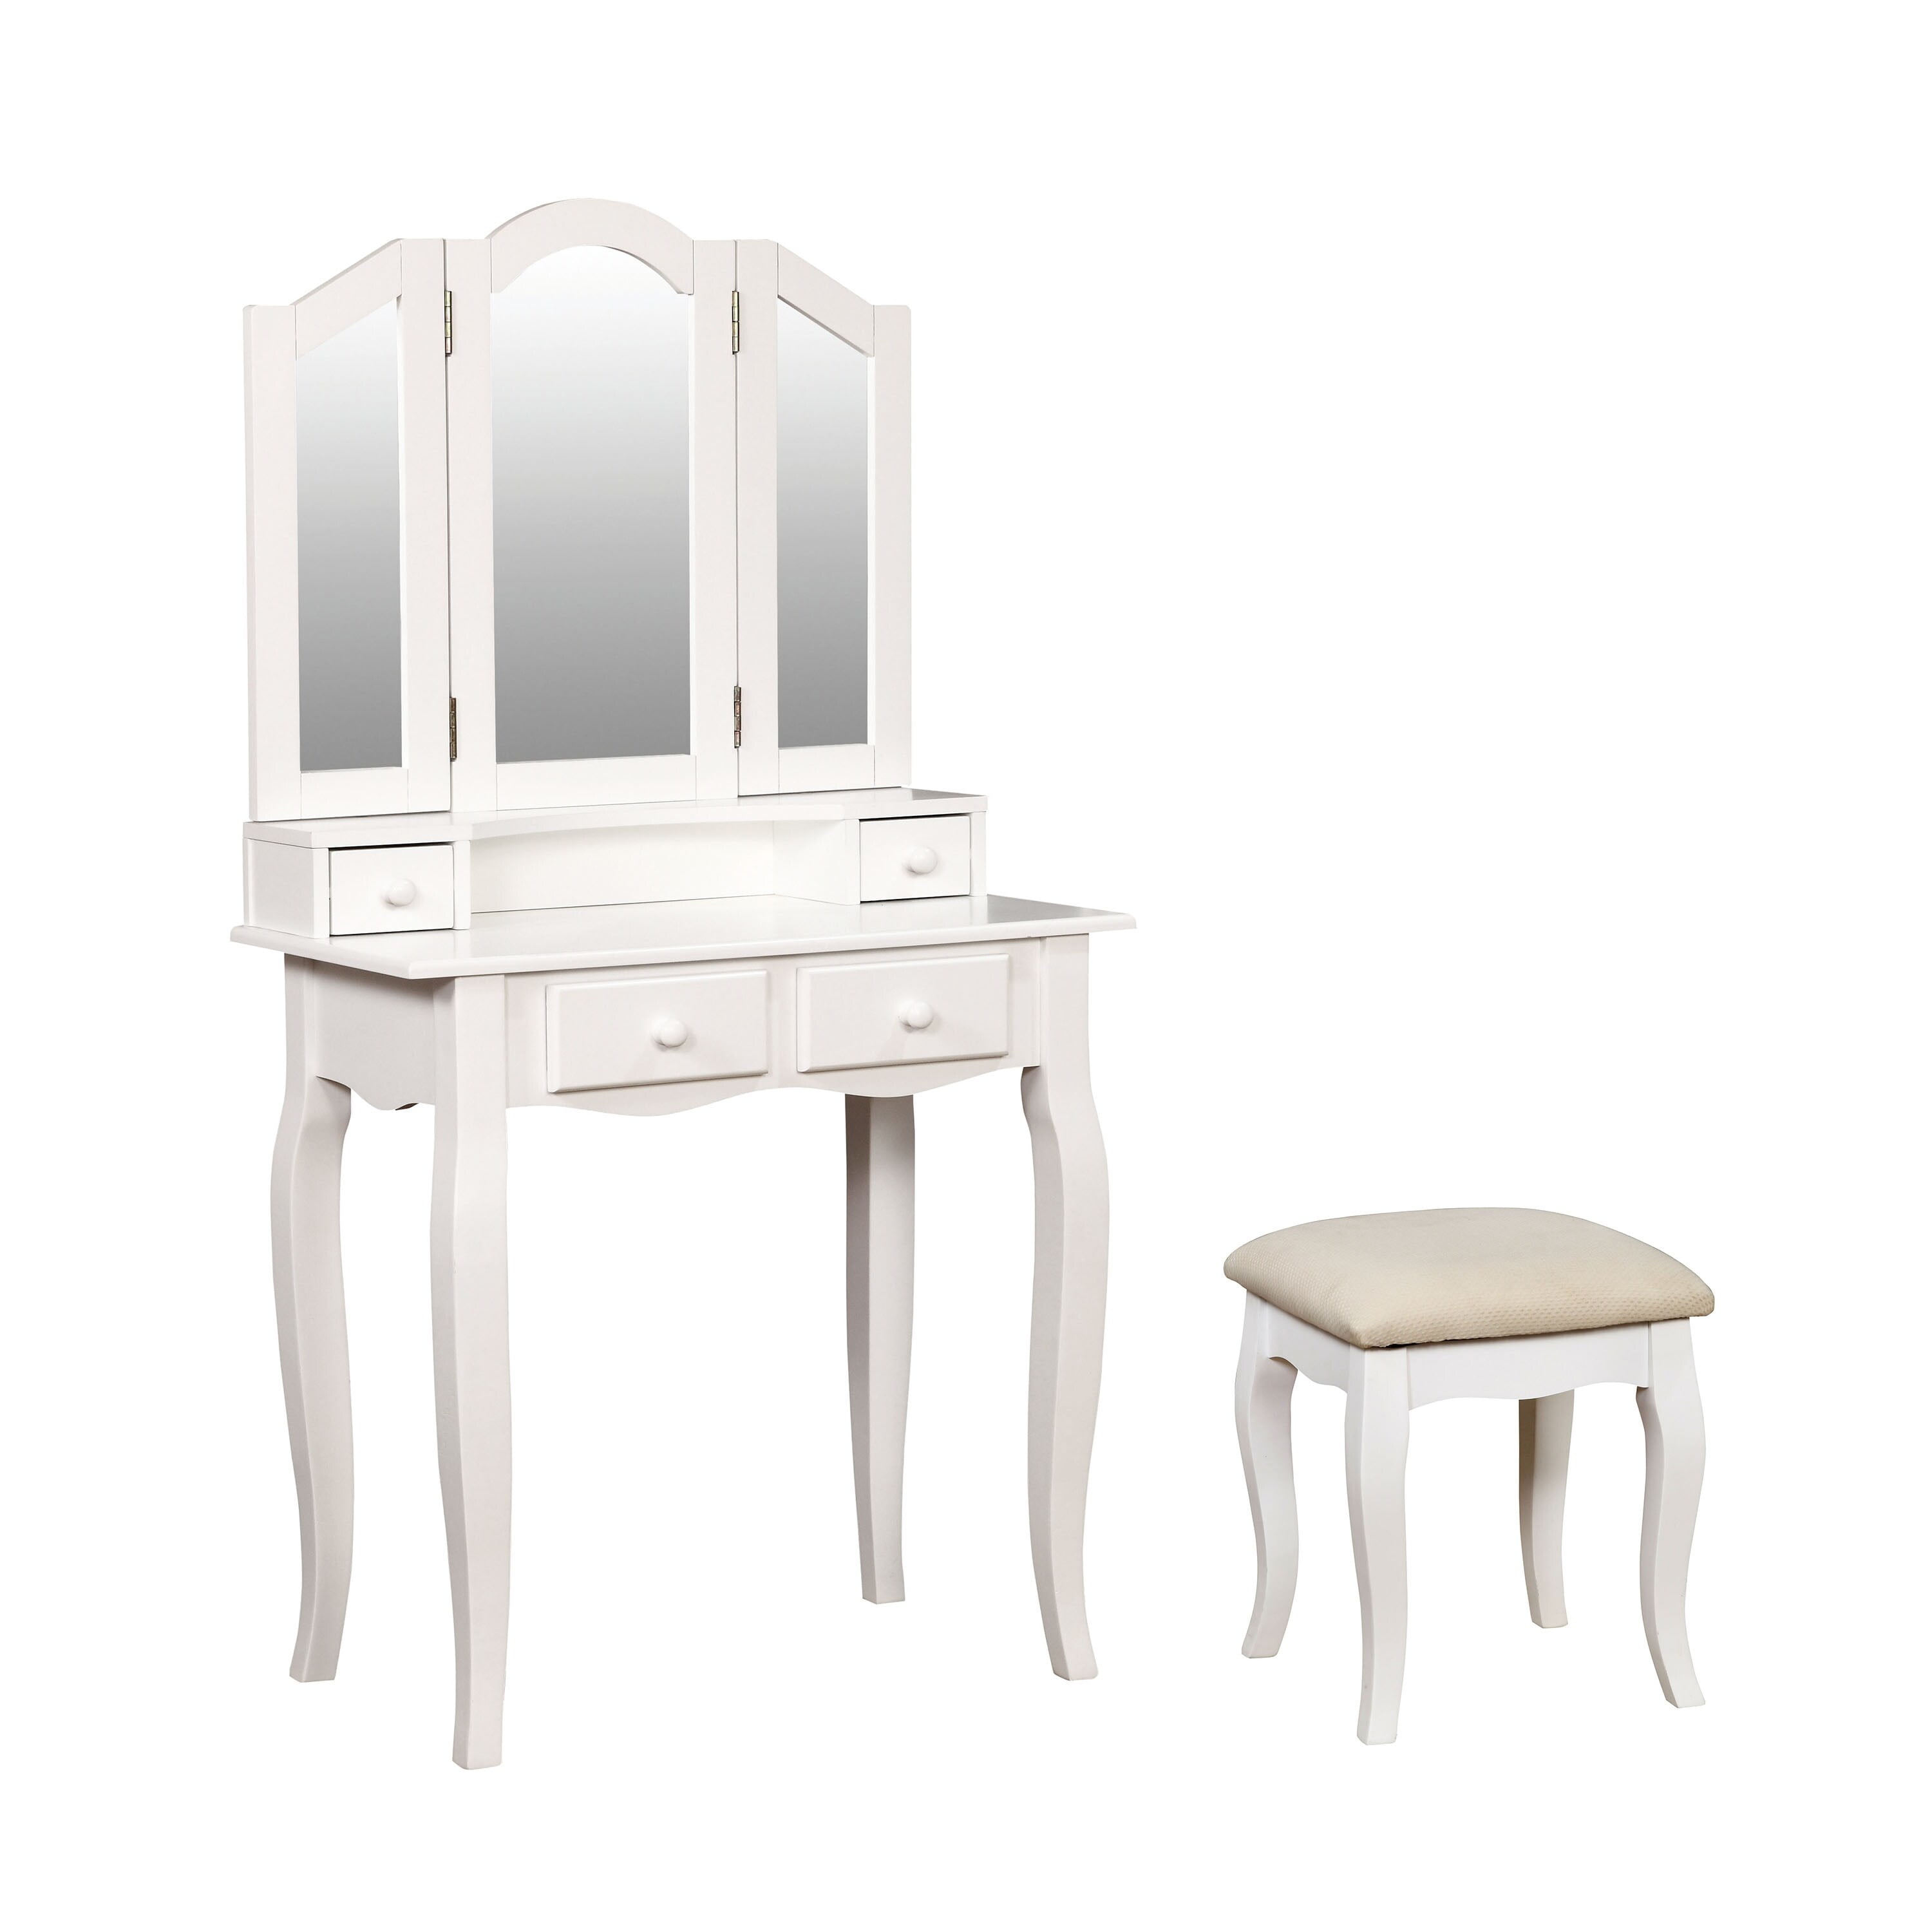 Frenchi Home Furnishing 3-Piece Vanity Set White